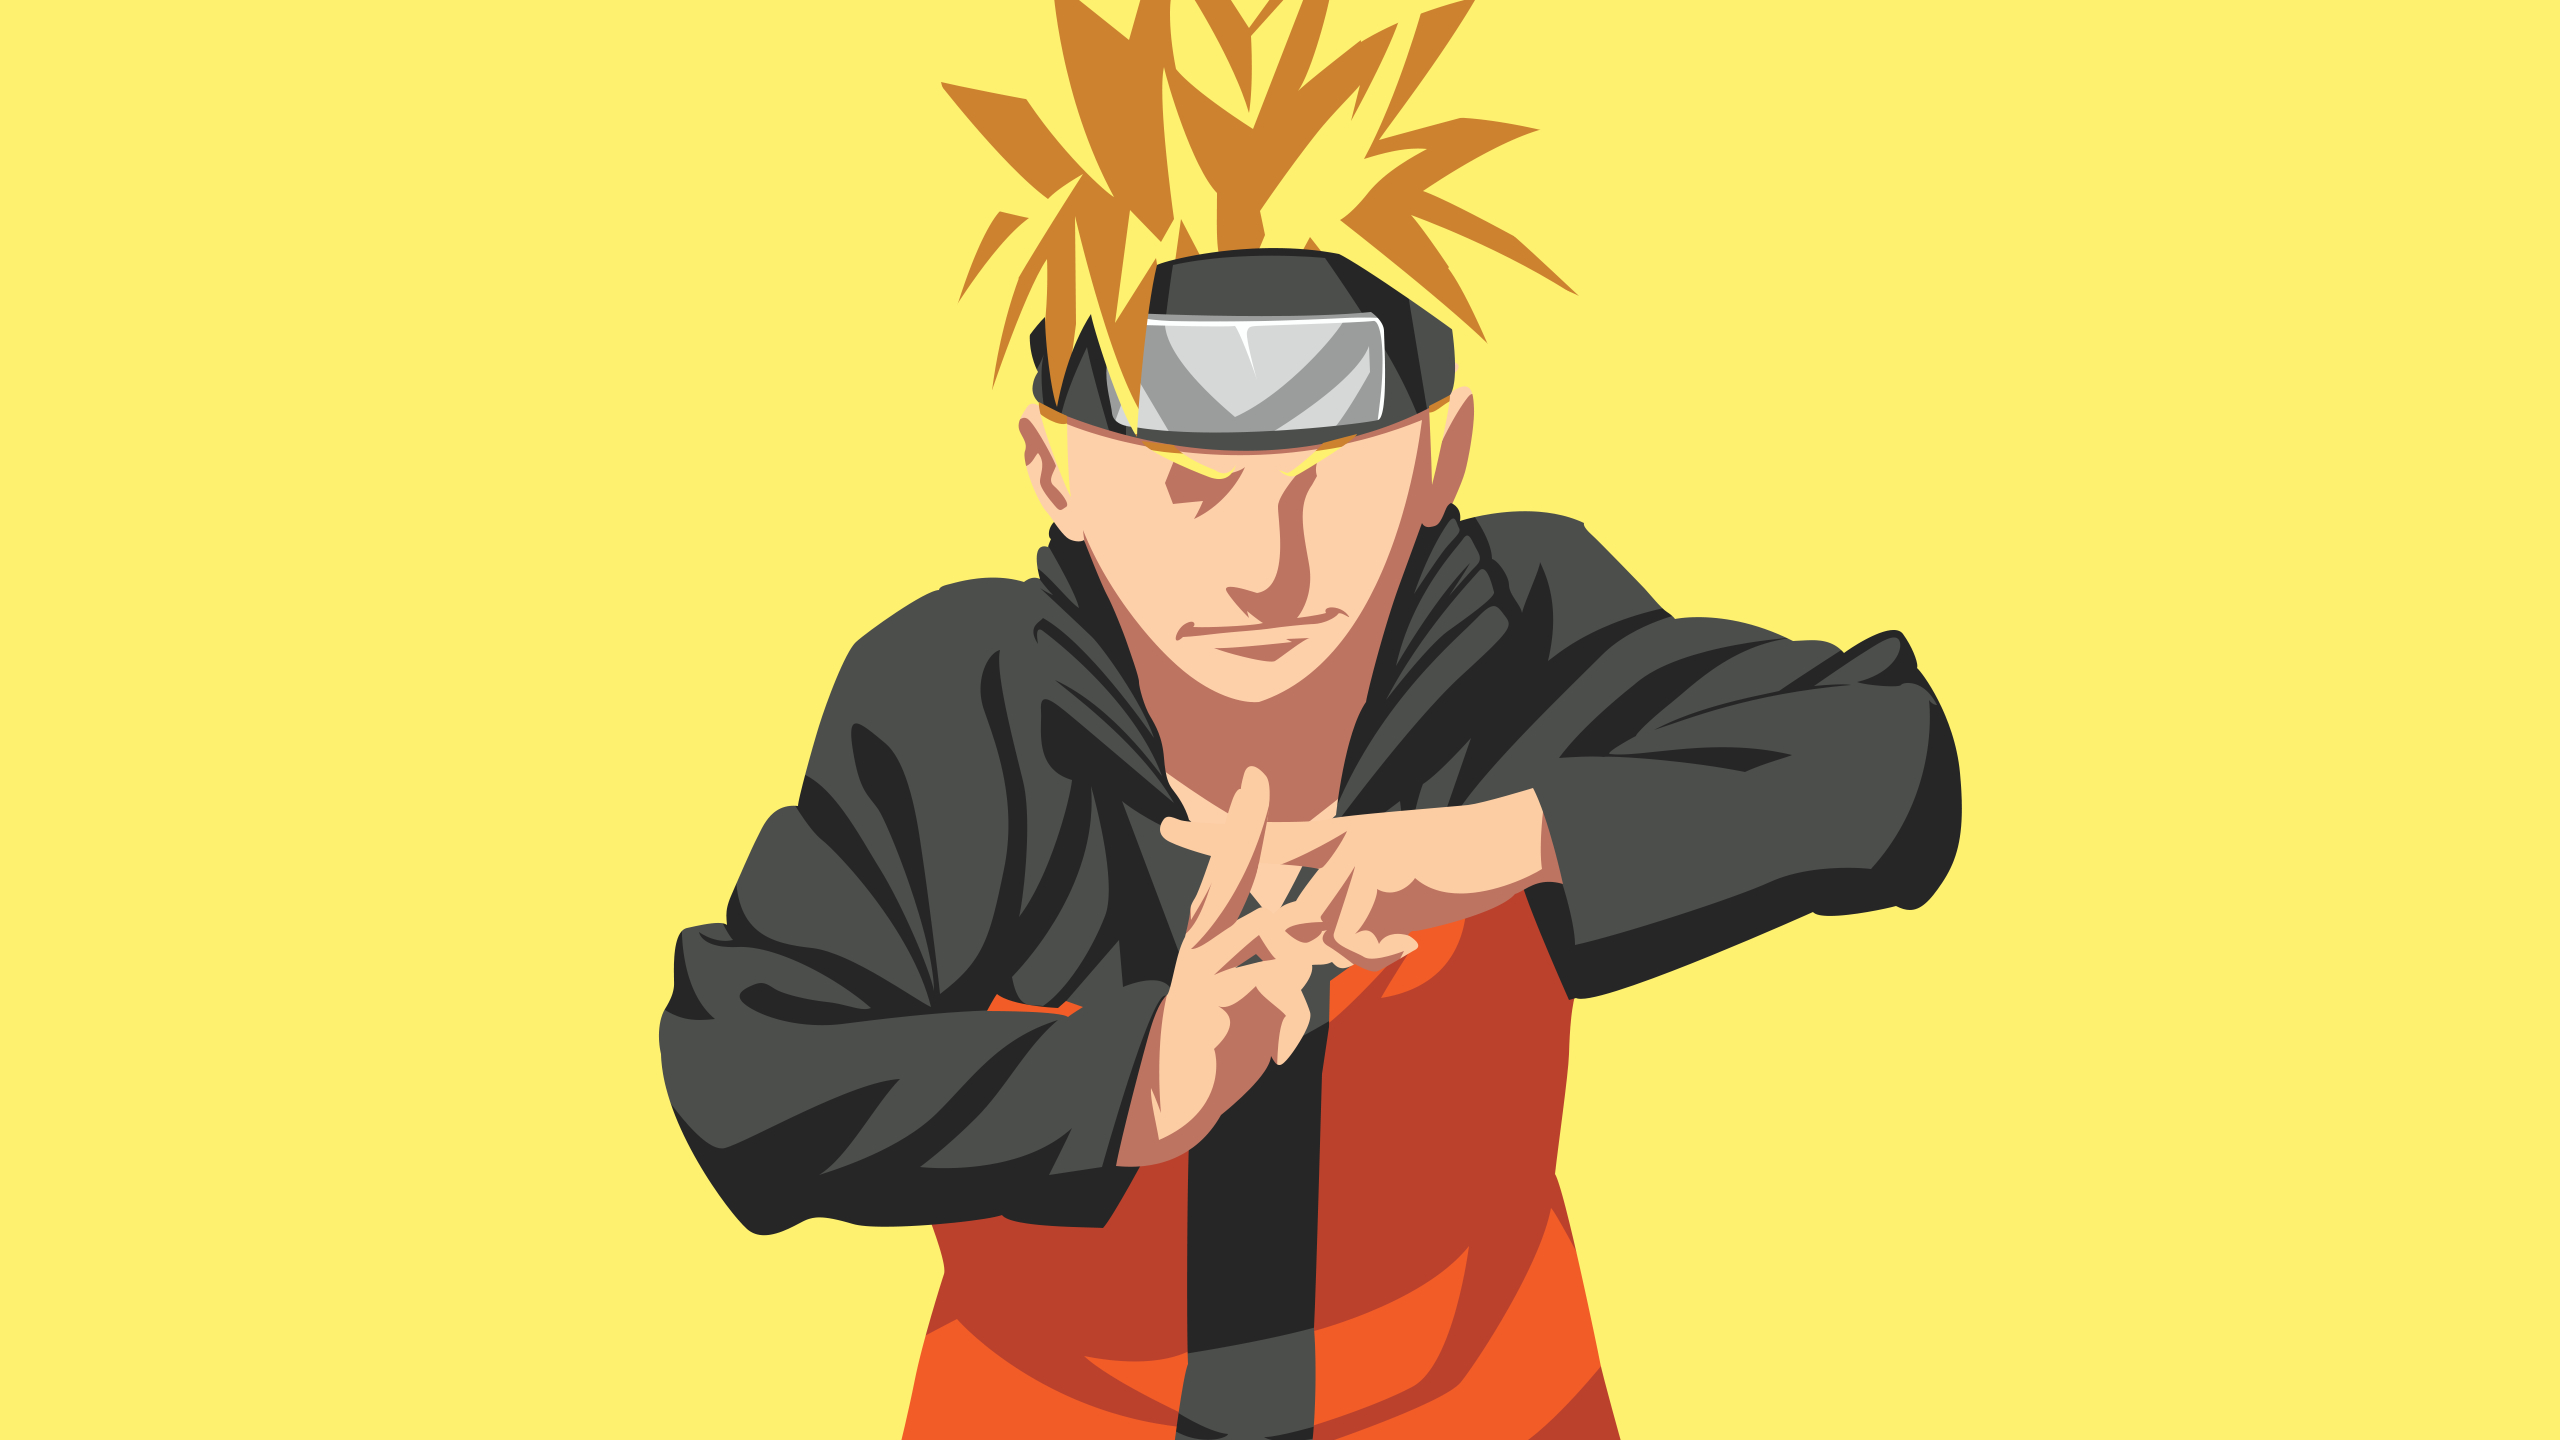 Naruto Uzumaki Minimal Art Wallpaper, HD Anime 4K ...